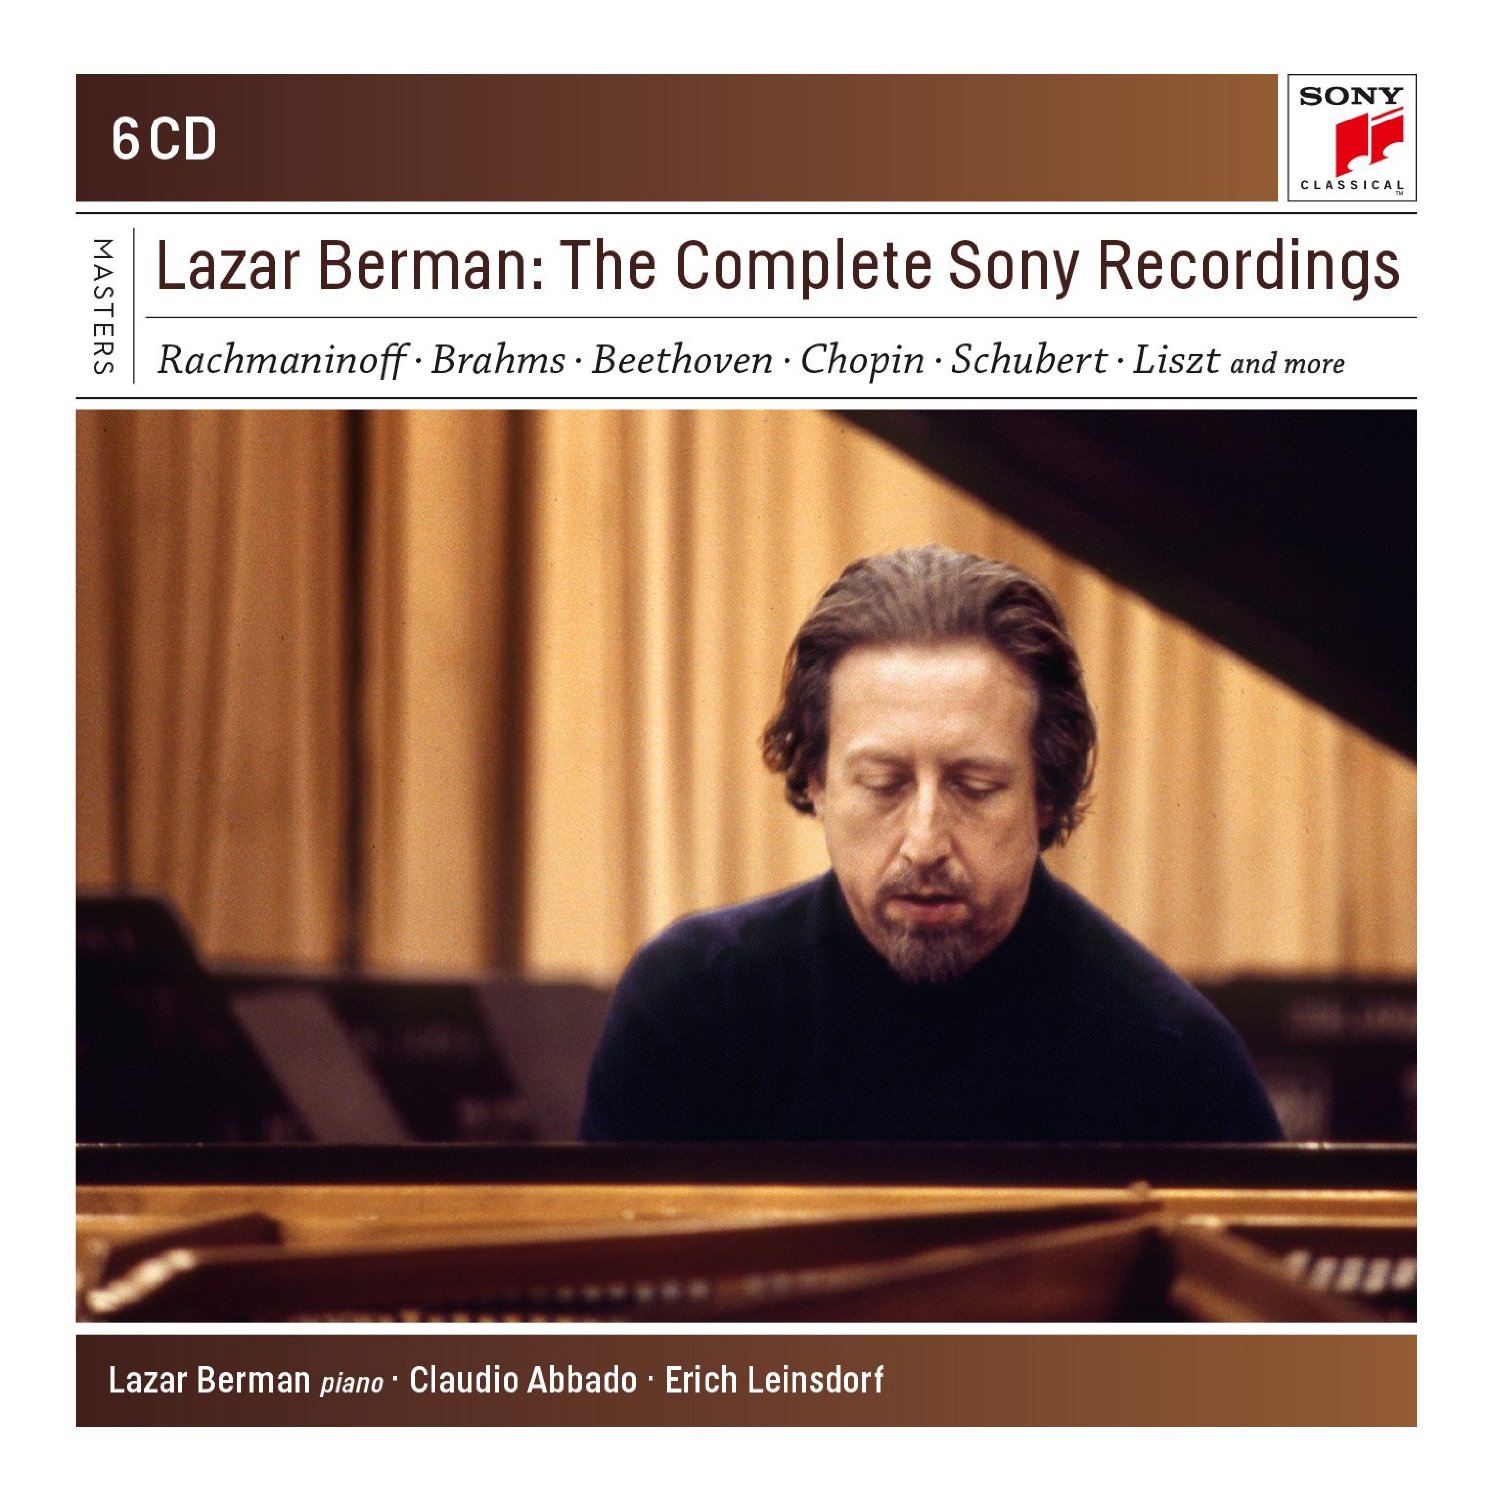 Sony Music Lazar berman - the complete sony recordings | lazar berman